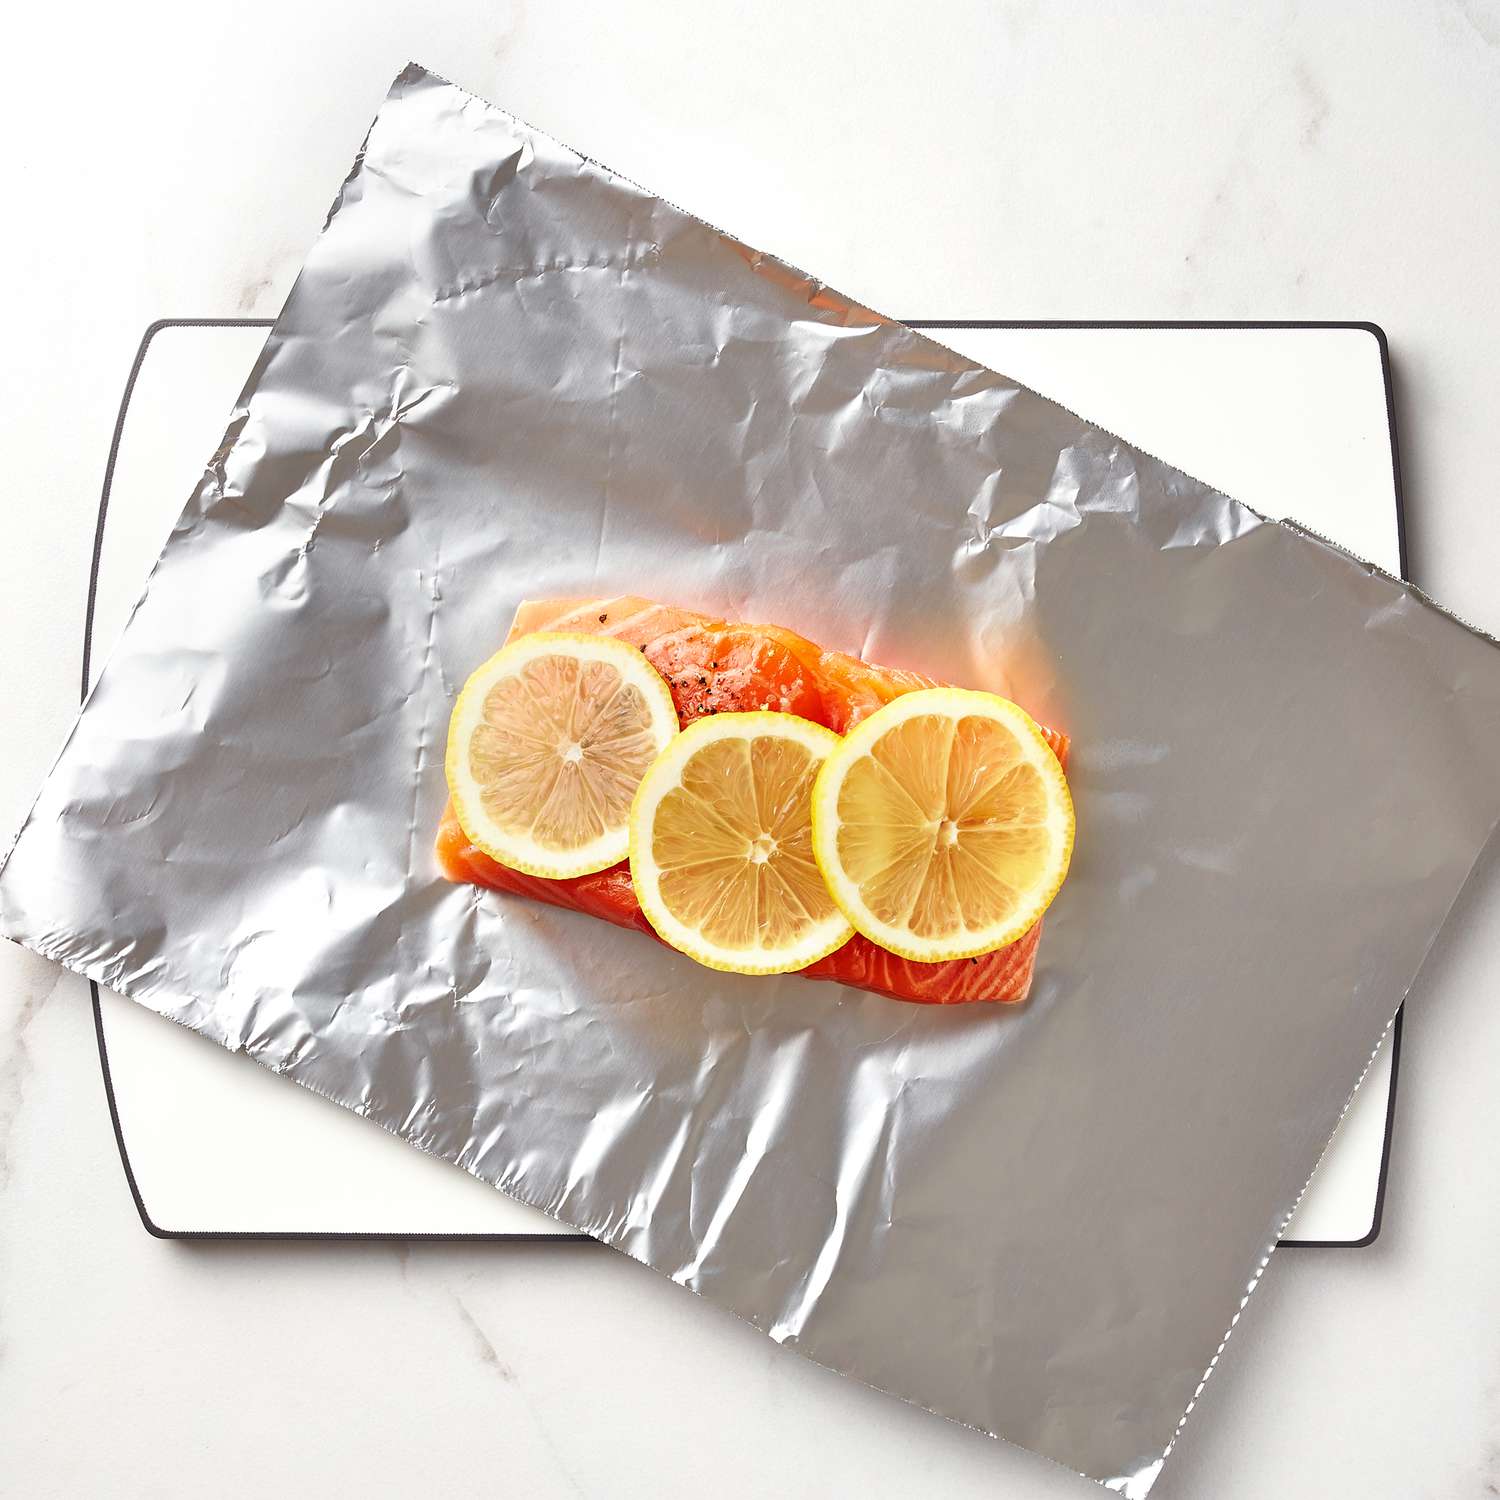 salmon fillet covered in lemon wedges on a tin foil sheet